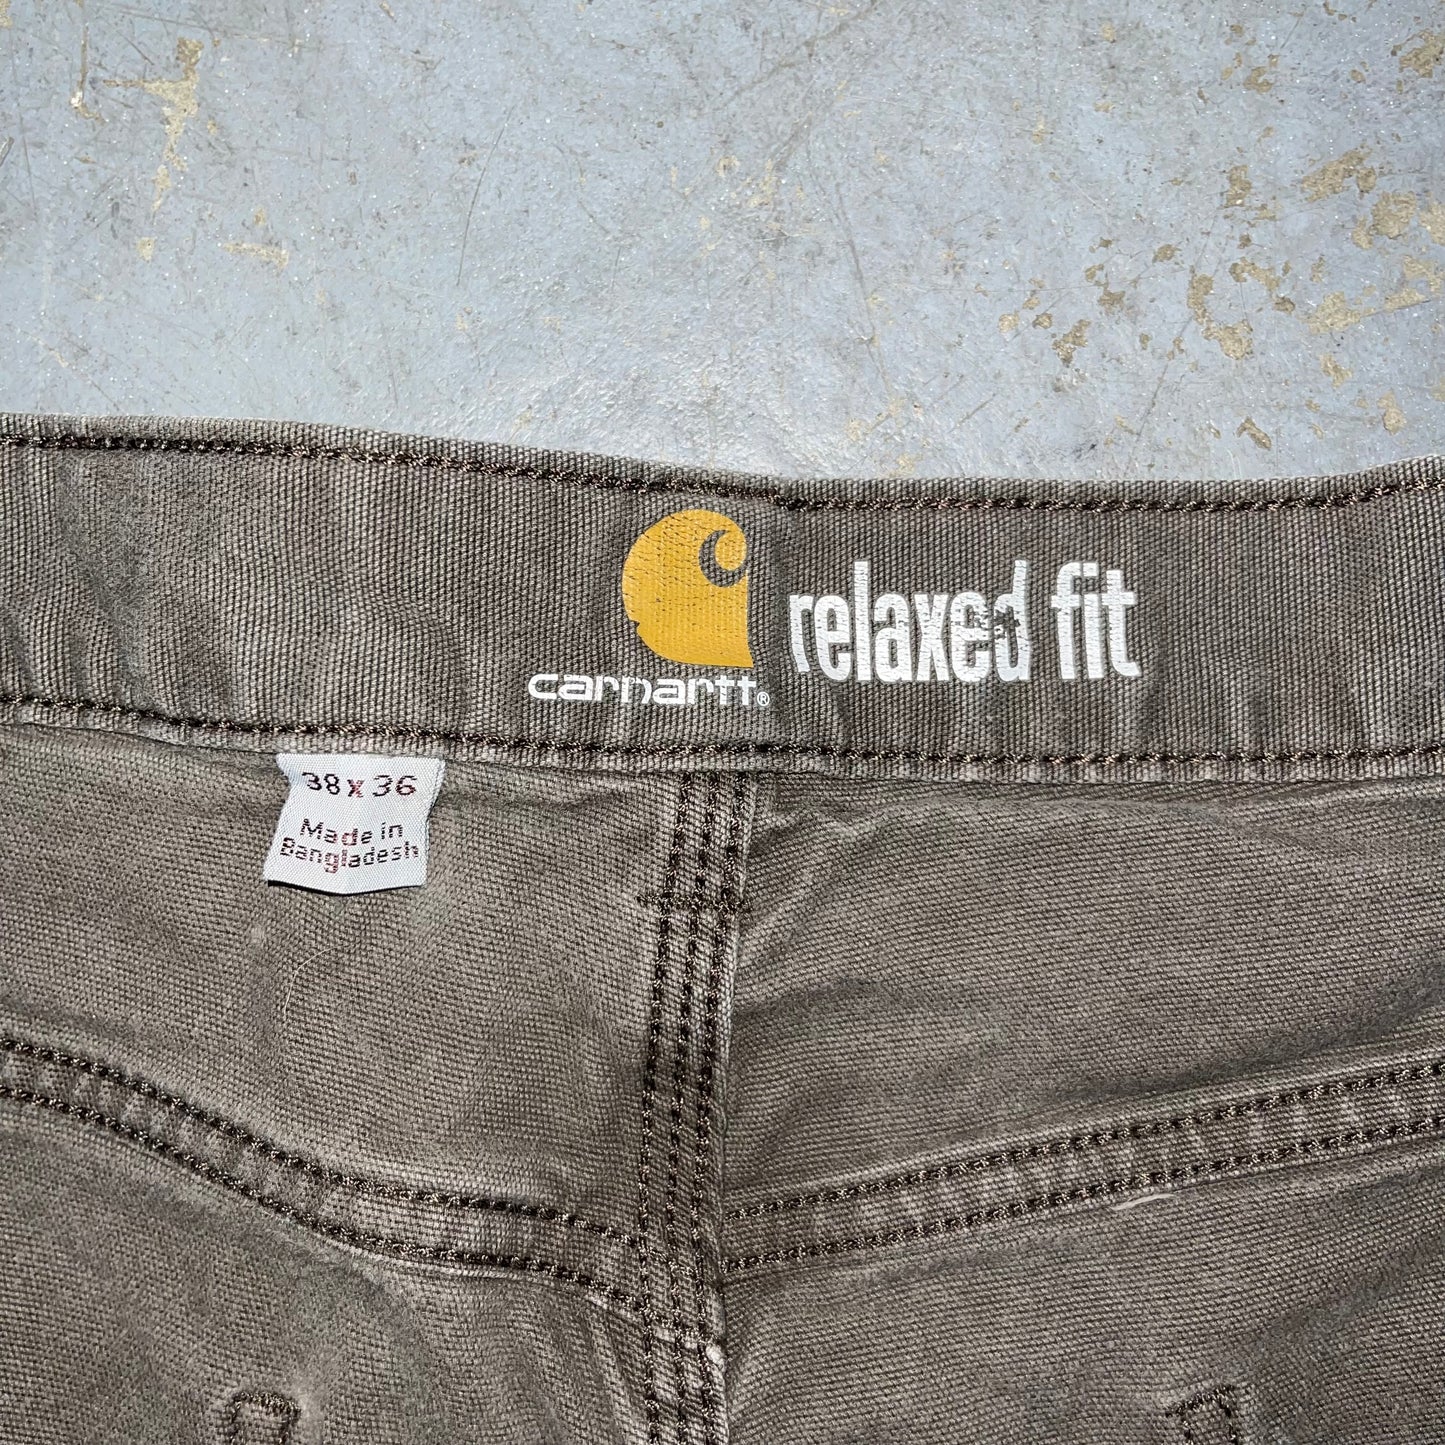 Carhartt Relaxed Fit Carpenter Pants. 38x36